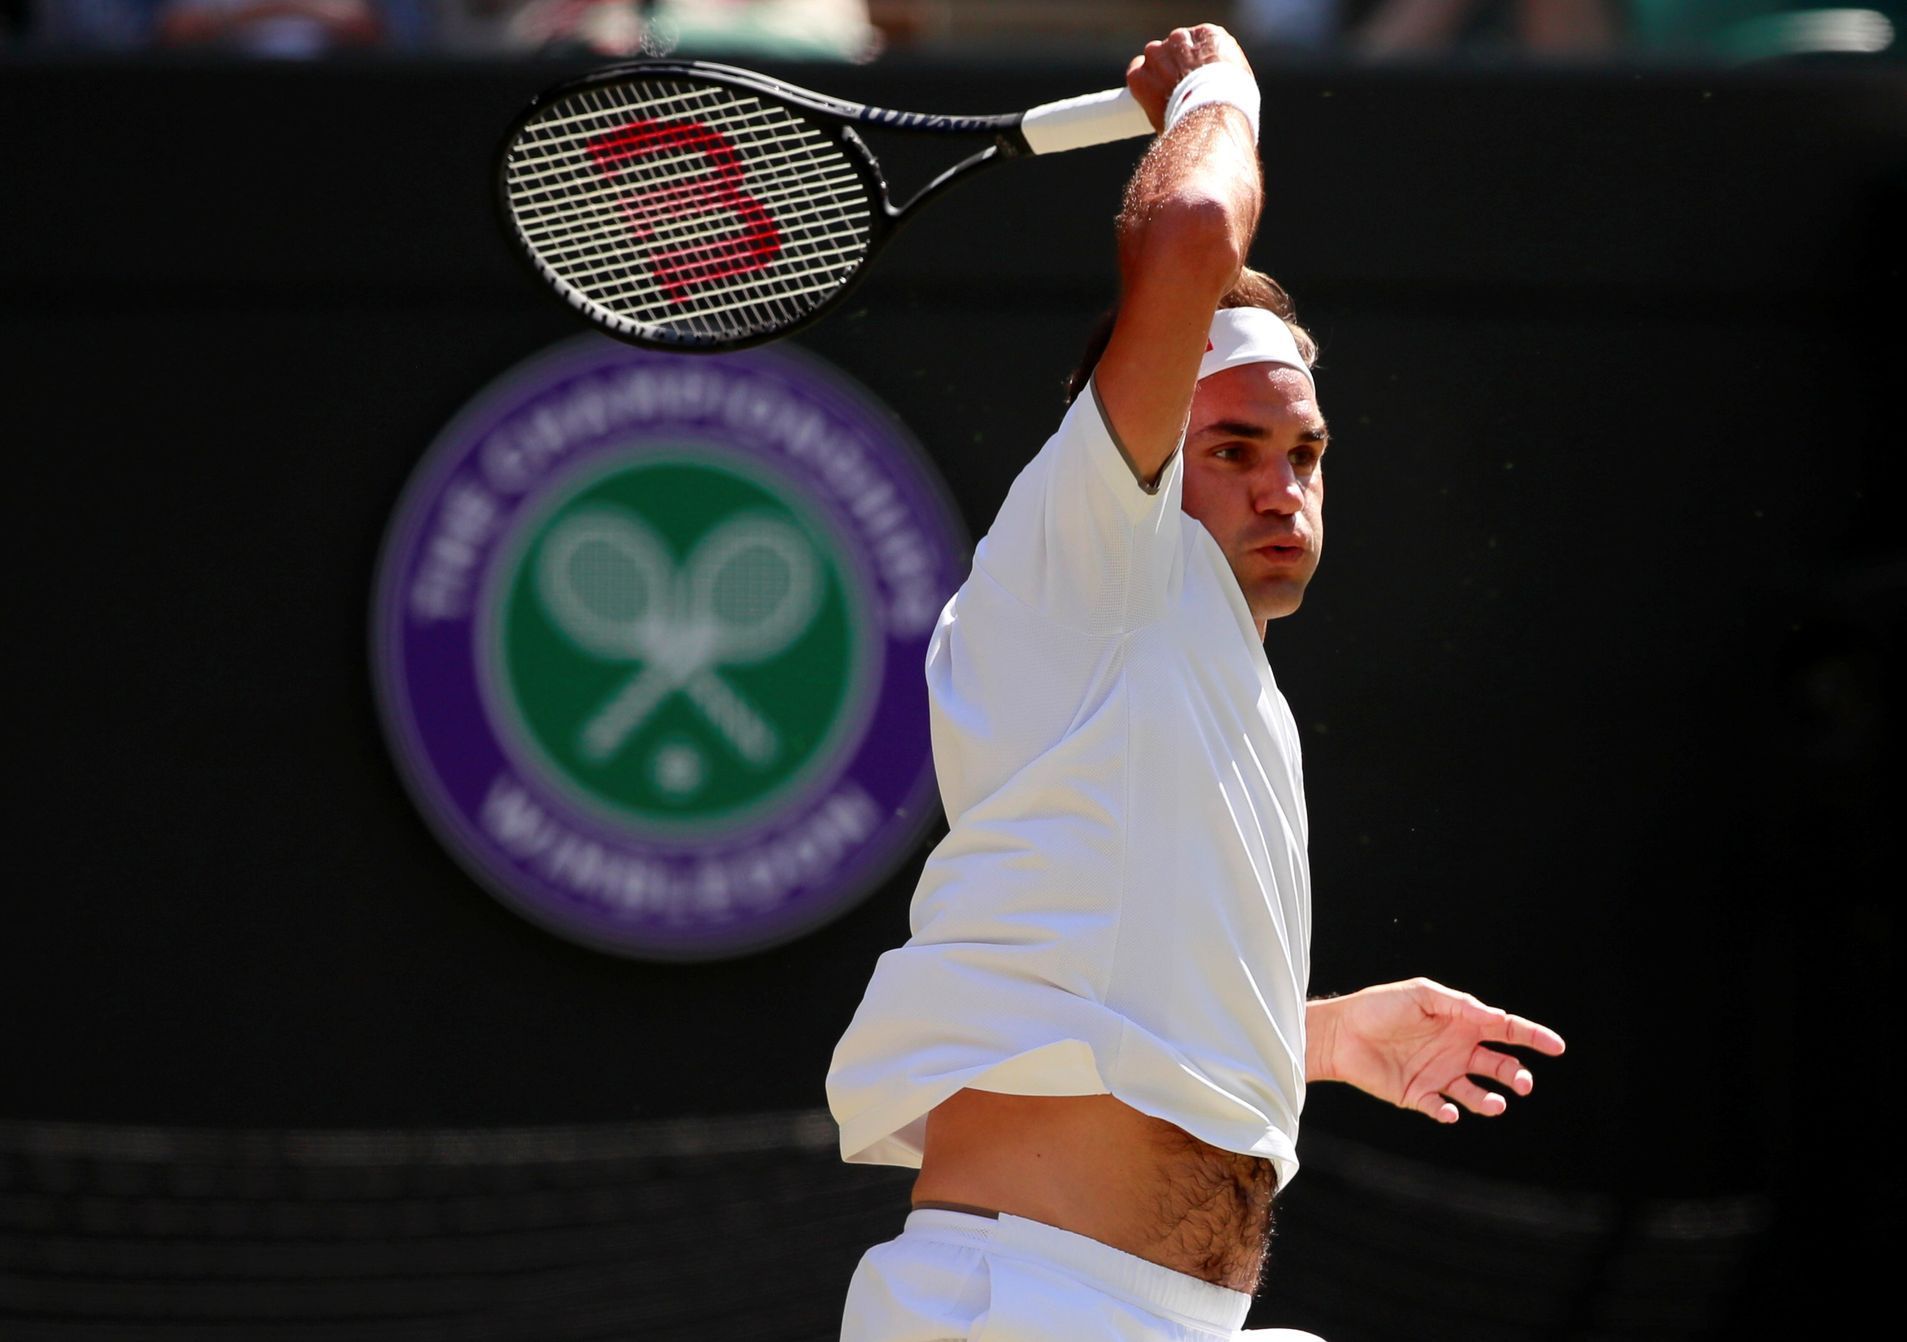 Wimbledon 2019, den čtvrtý: Roger Federer